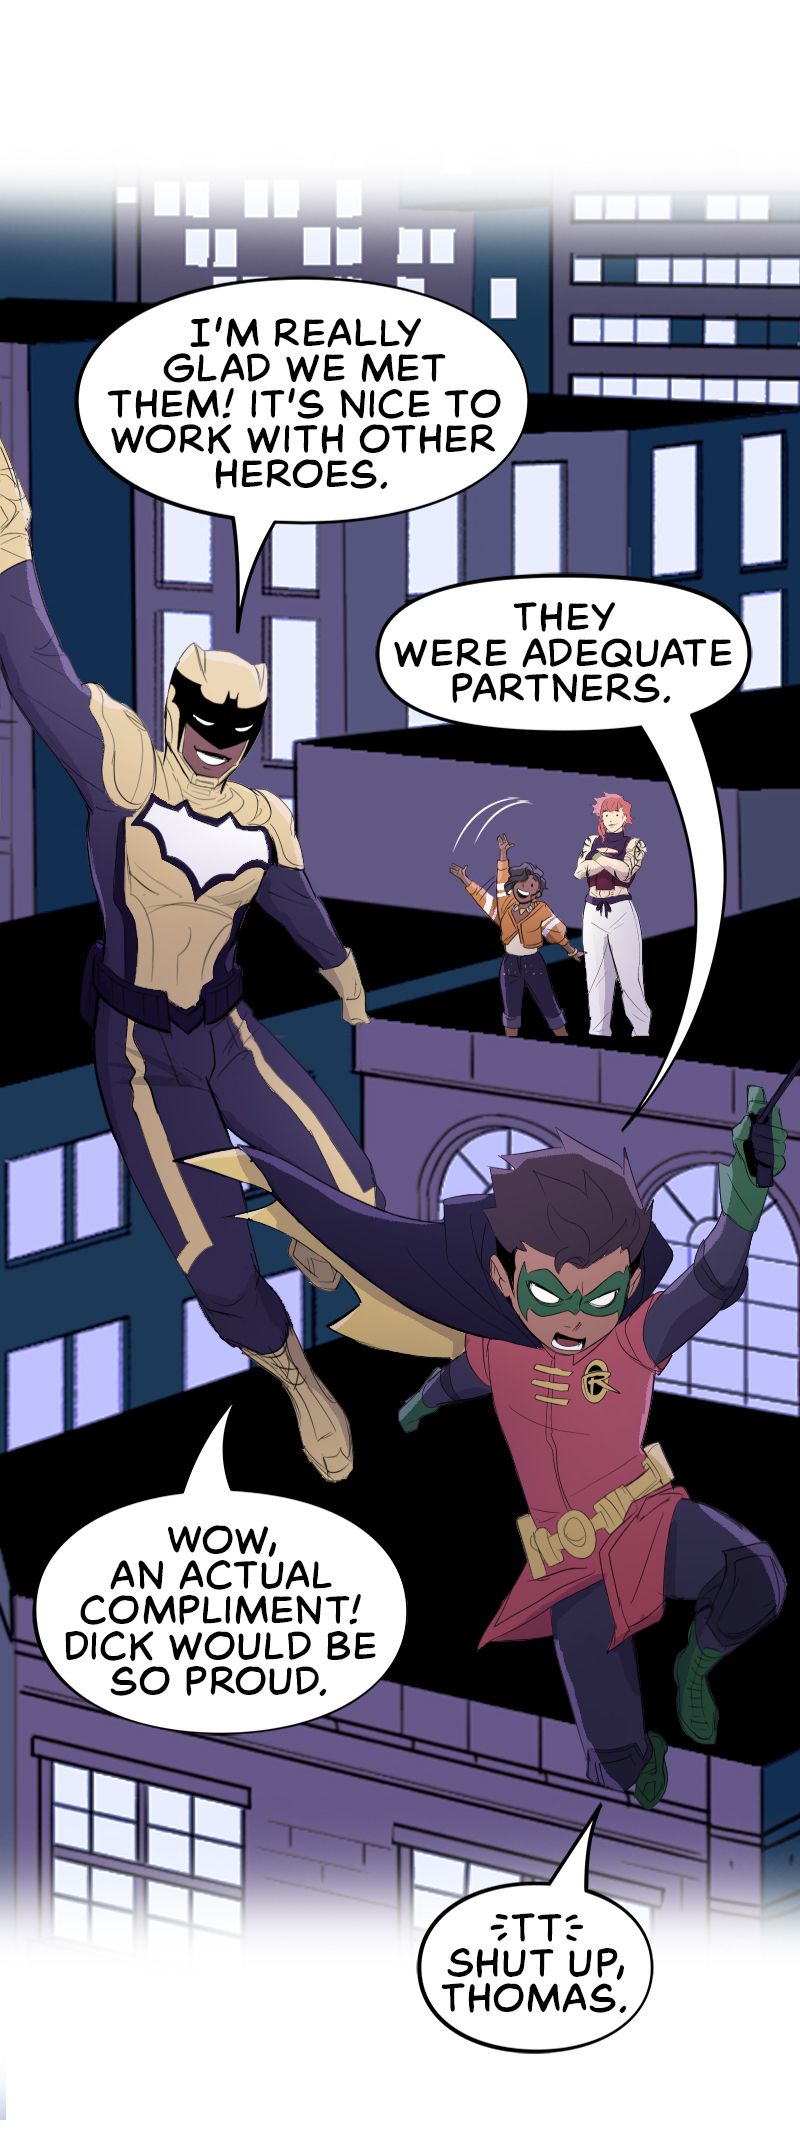 Duke cheerfully and Damian grumply bid farewell to Vixen and her friend in Batman: Wayne Family Adventures.